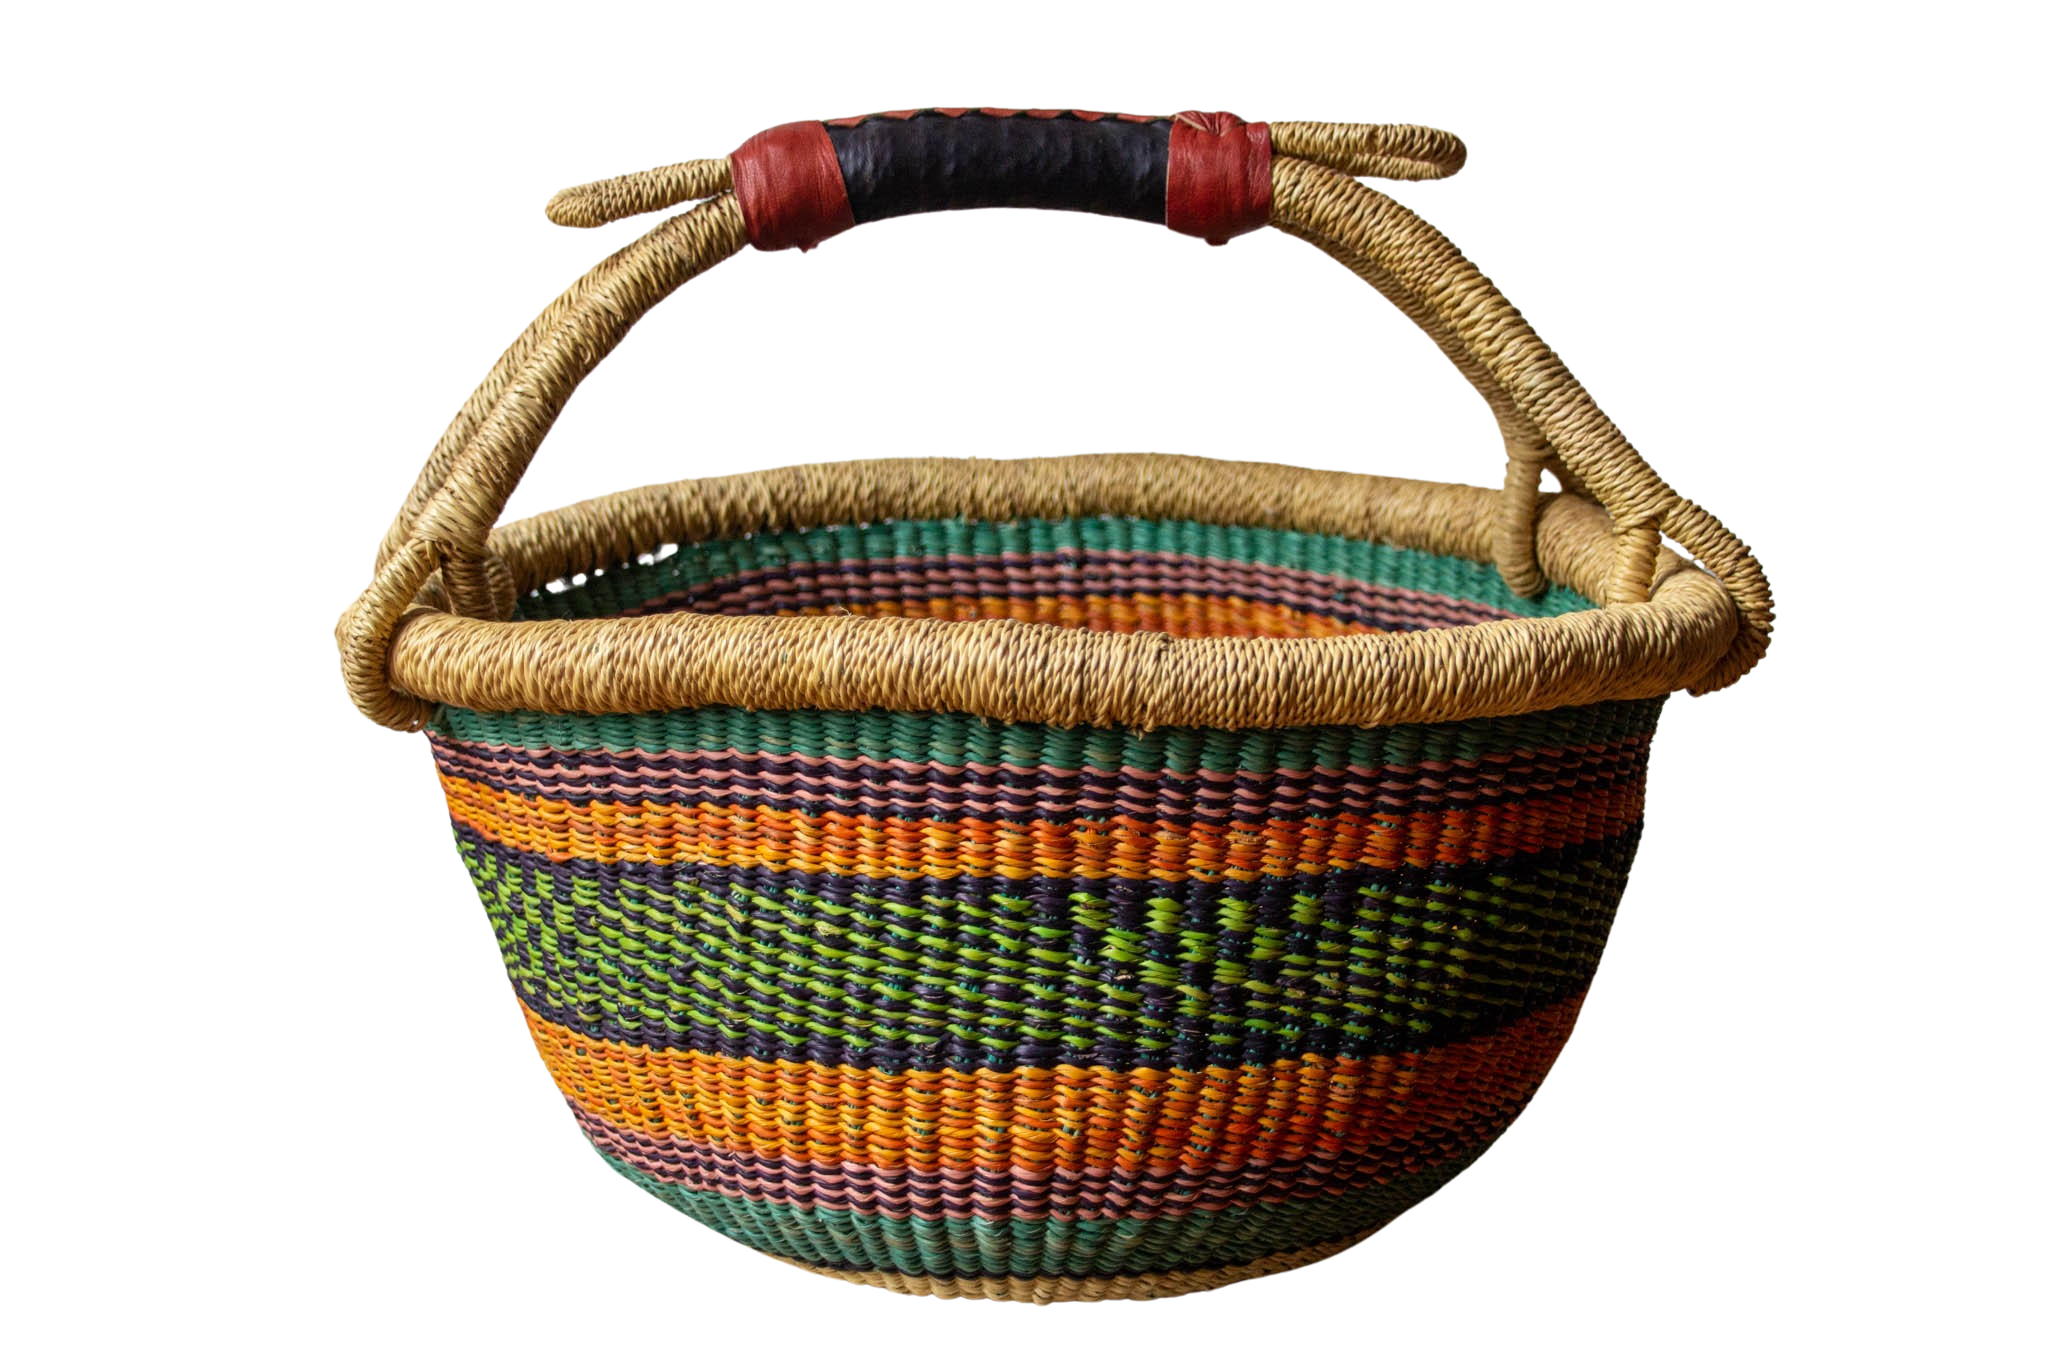 Turquoise and orange Round Basket of natural fiber